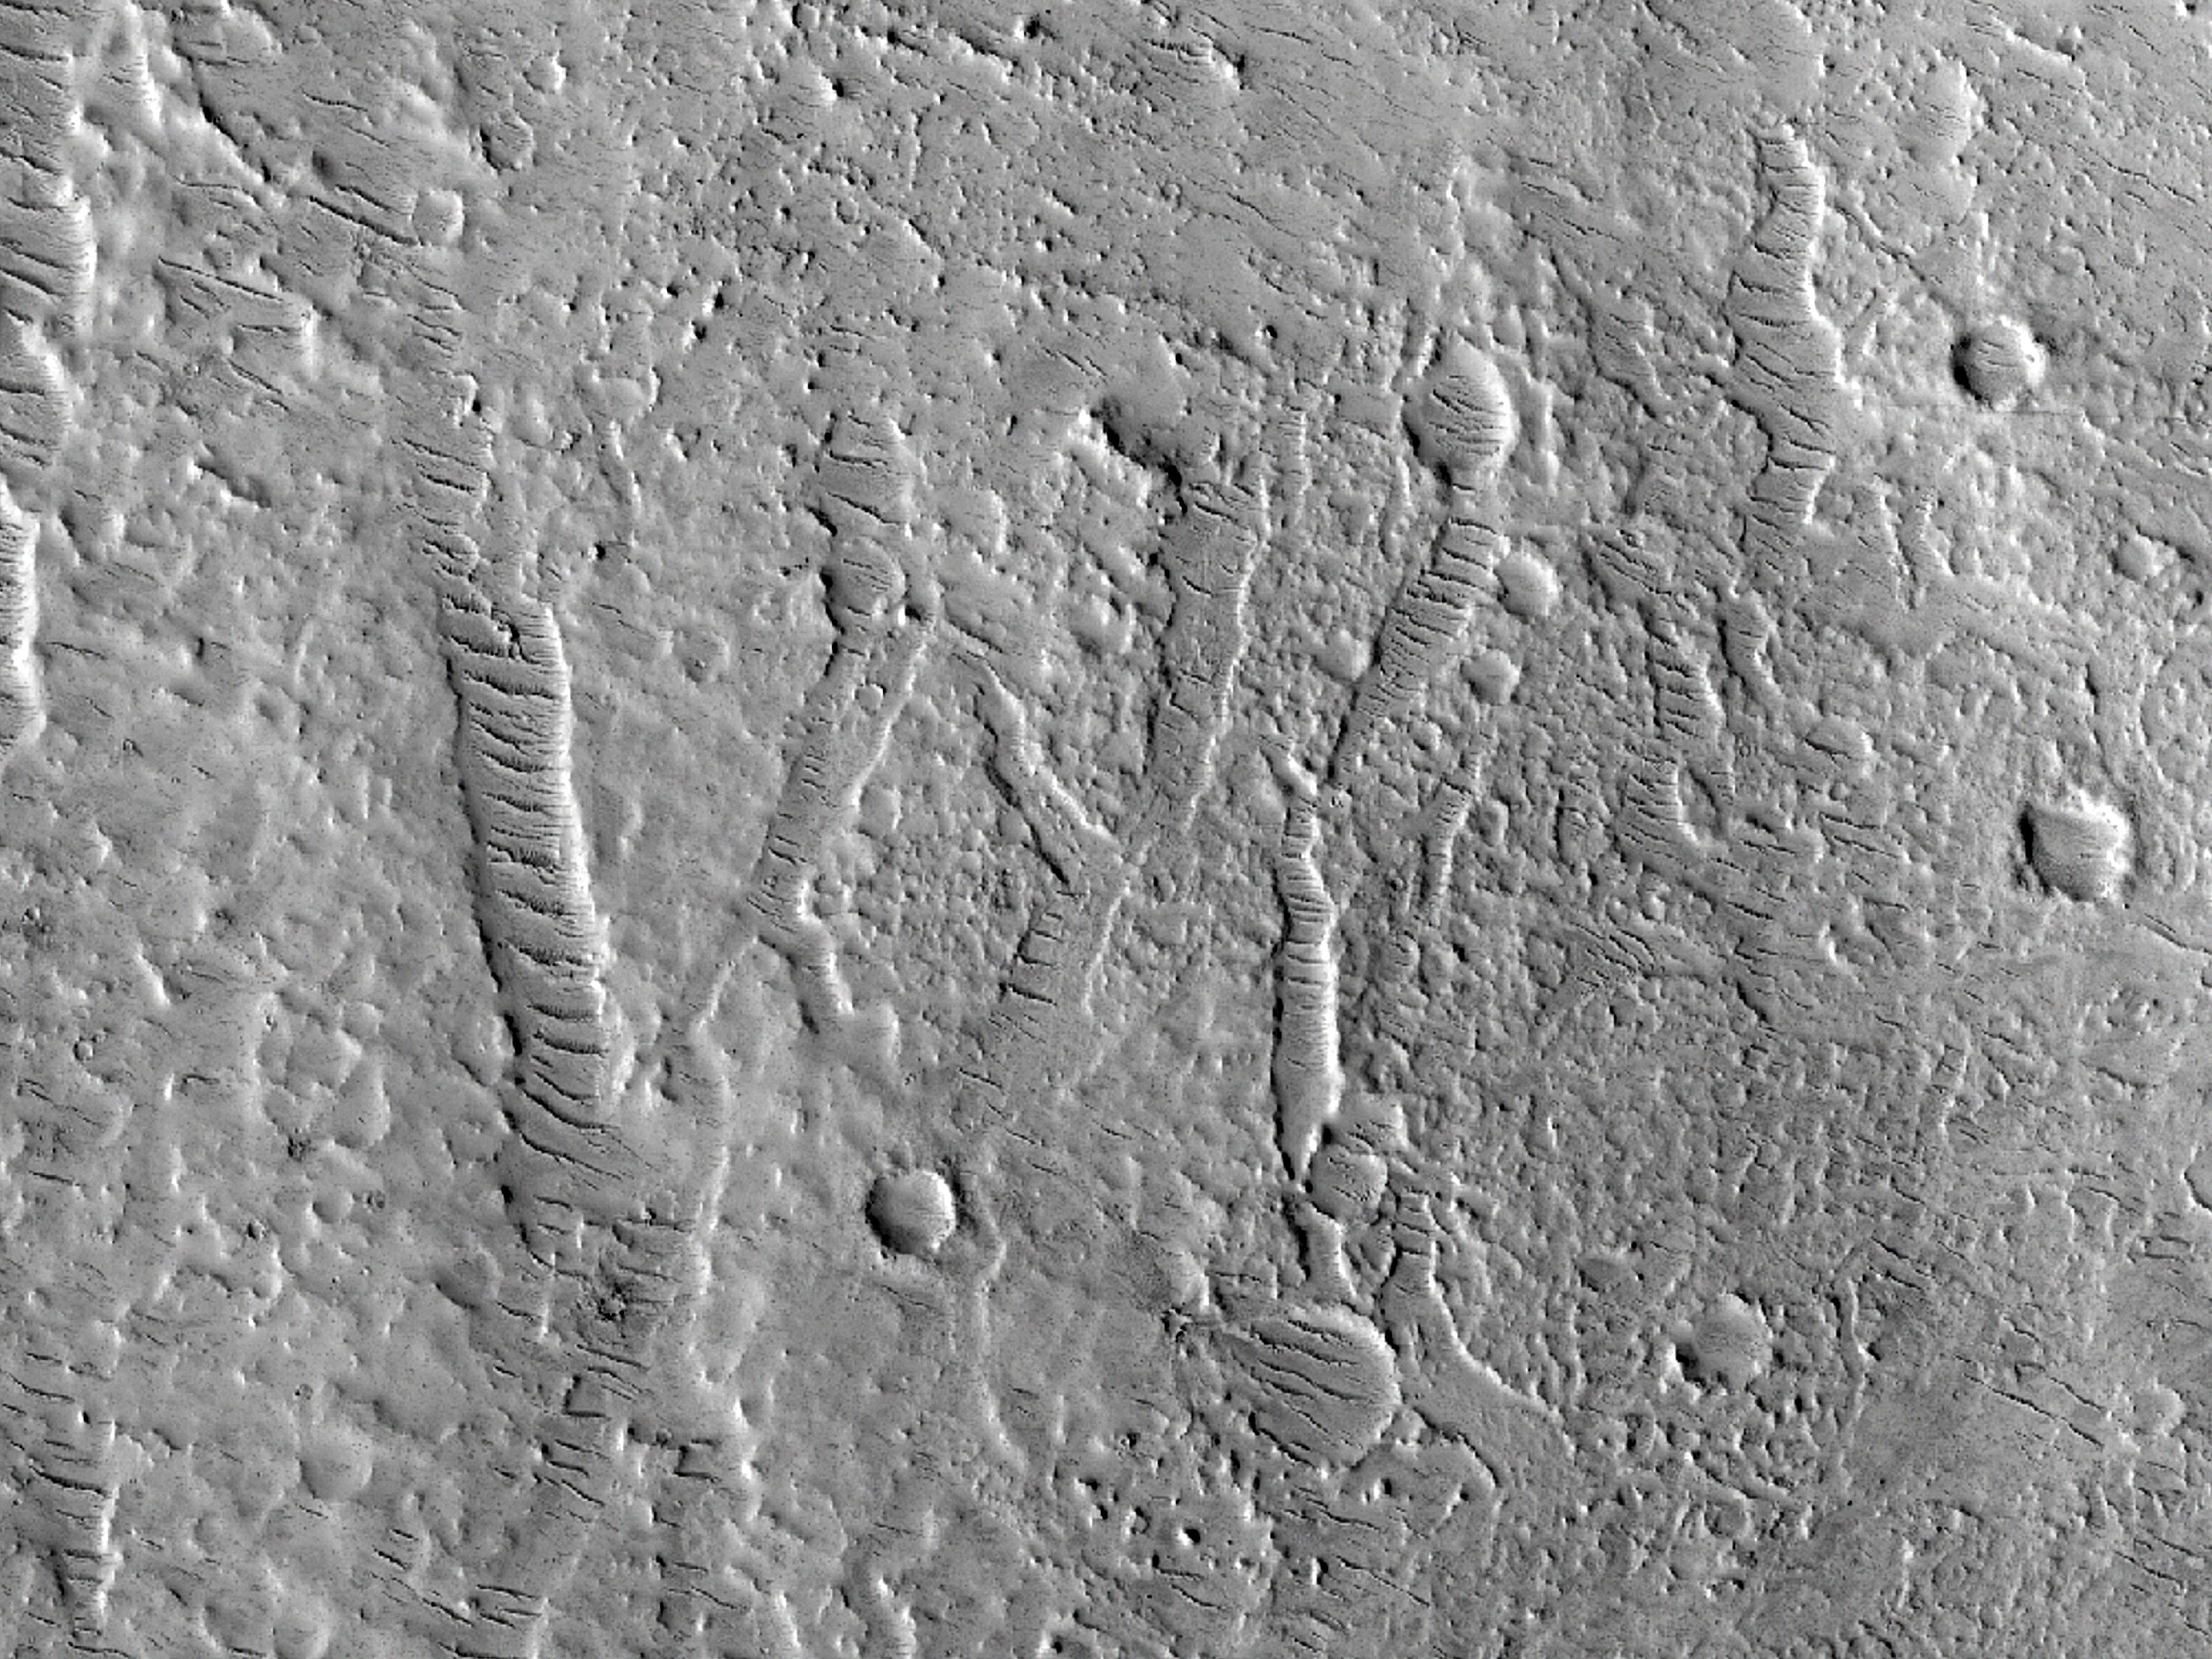 Ridges and Channels in Memnonia Sulci